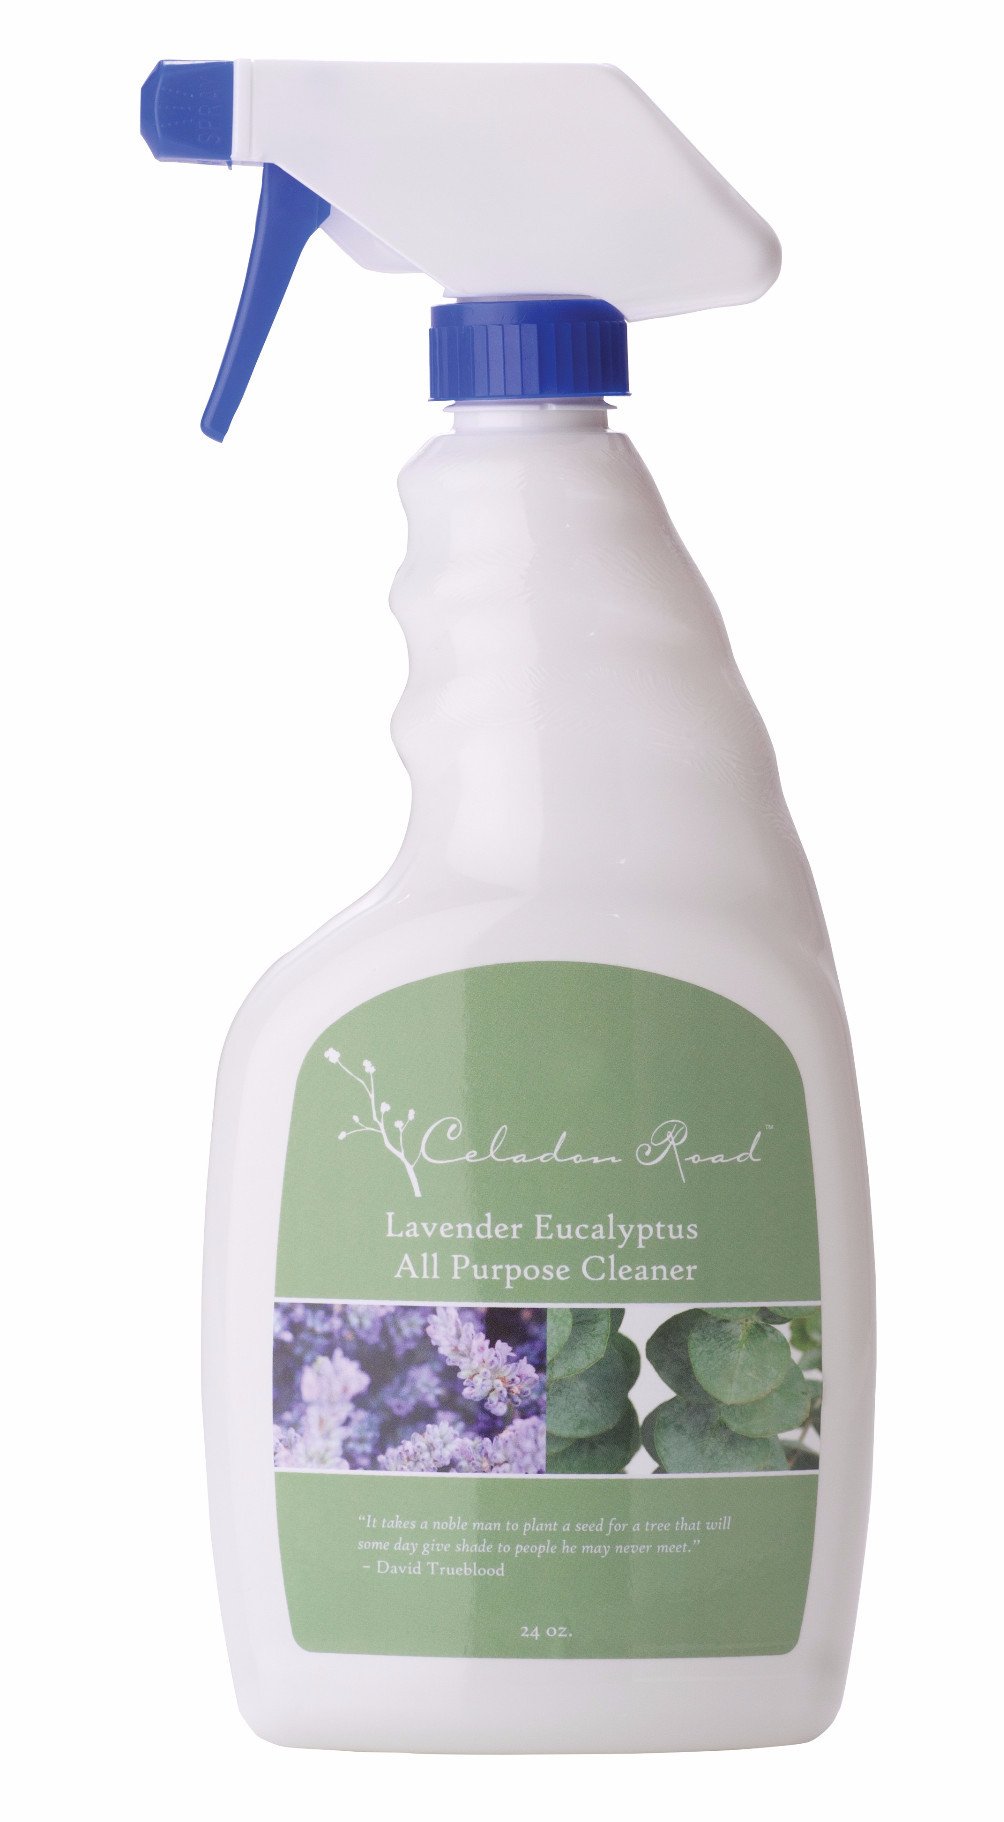 Lavender Eucalyptus All Purpose Cleaner- Celadon Road- www.celadonroad.com